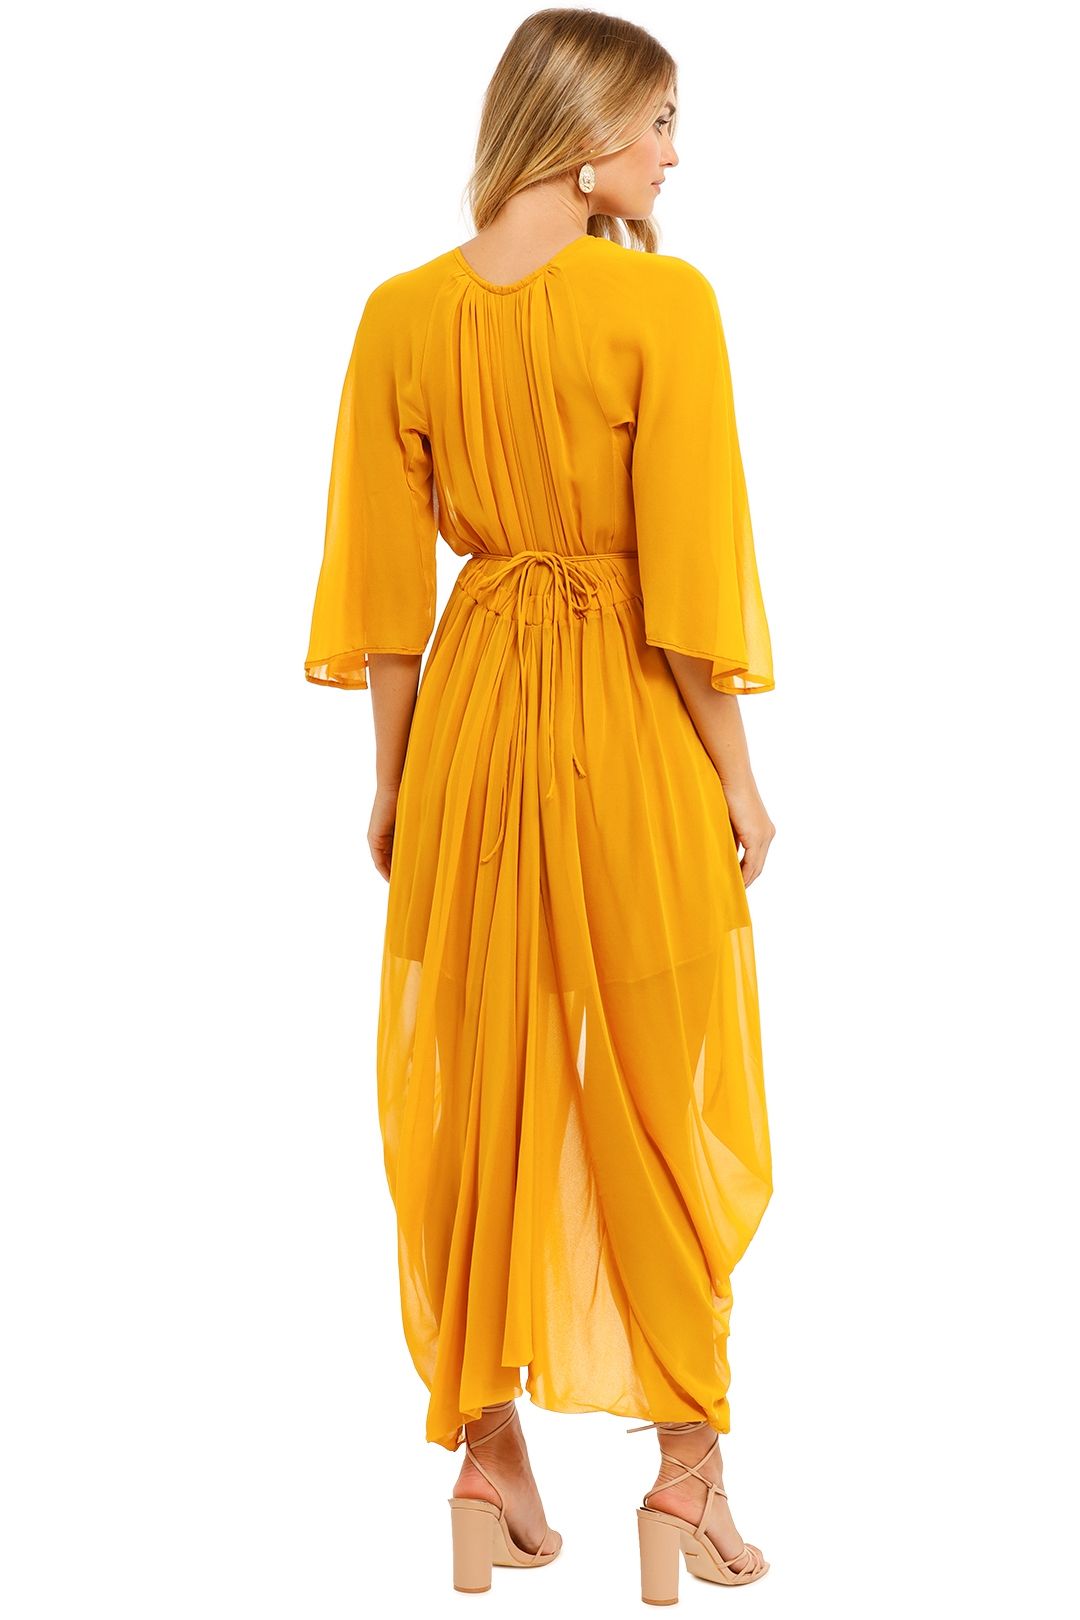 KITX Shell Drape Dress Marigold midi